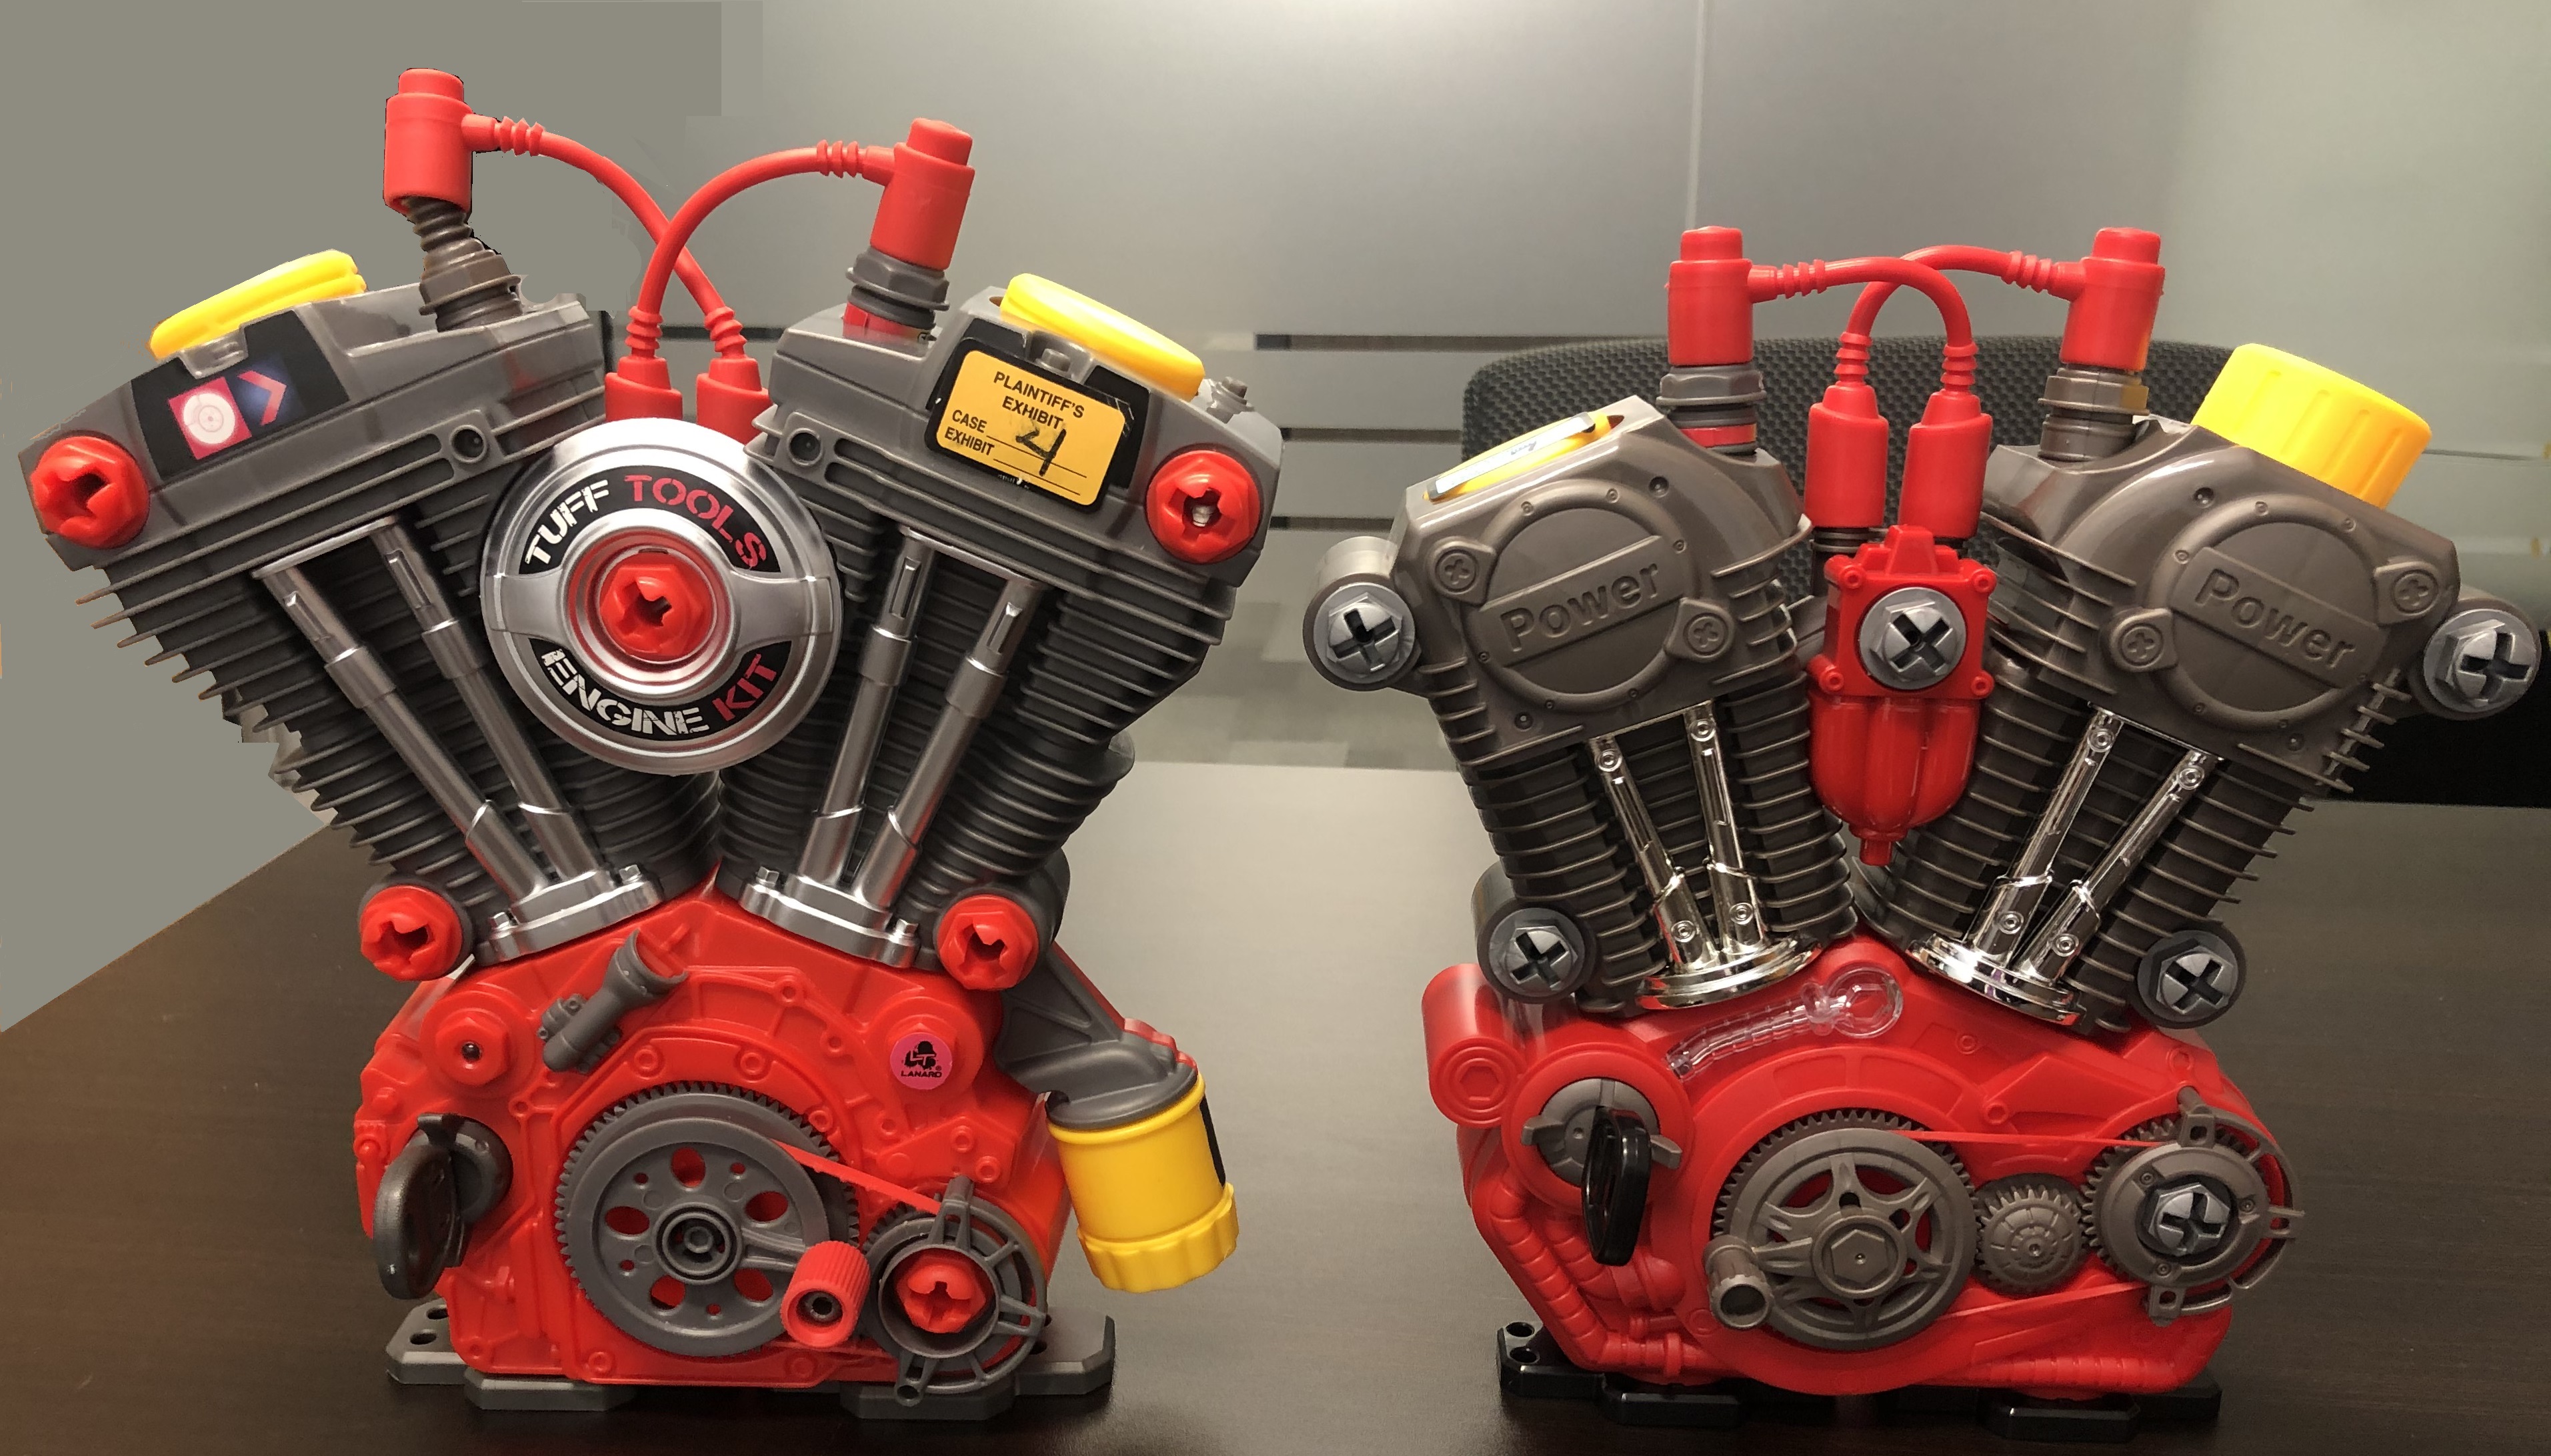 Lanard toy motorcycle engine infringment 